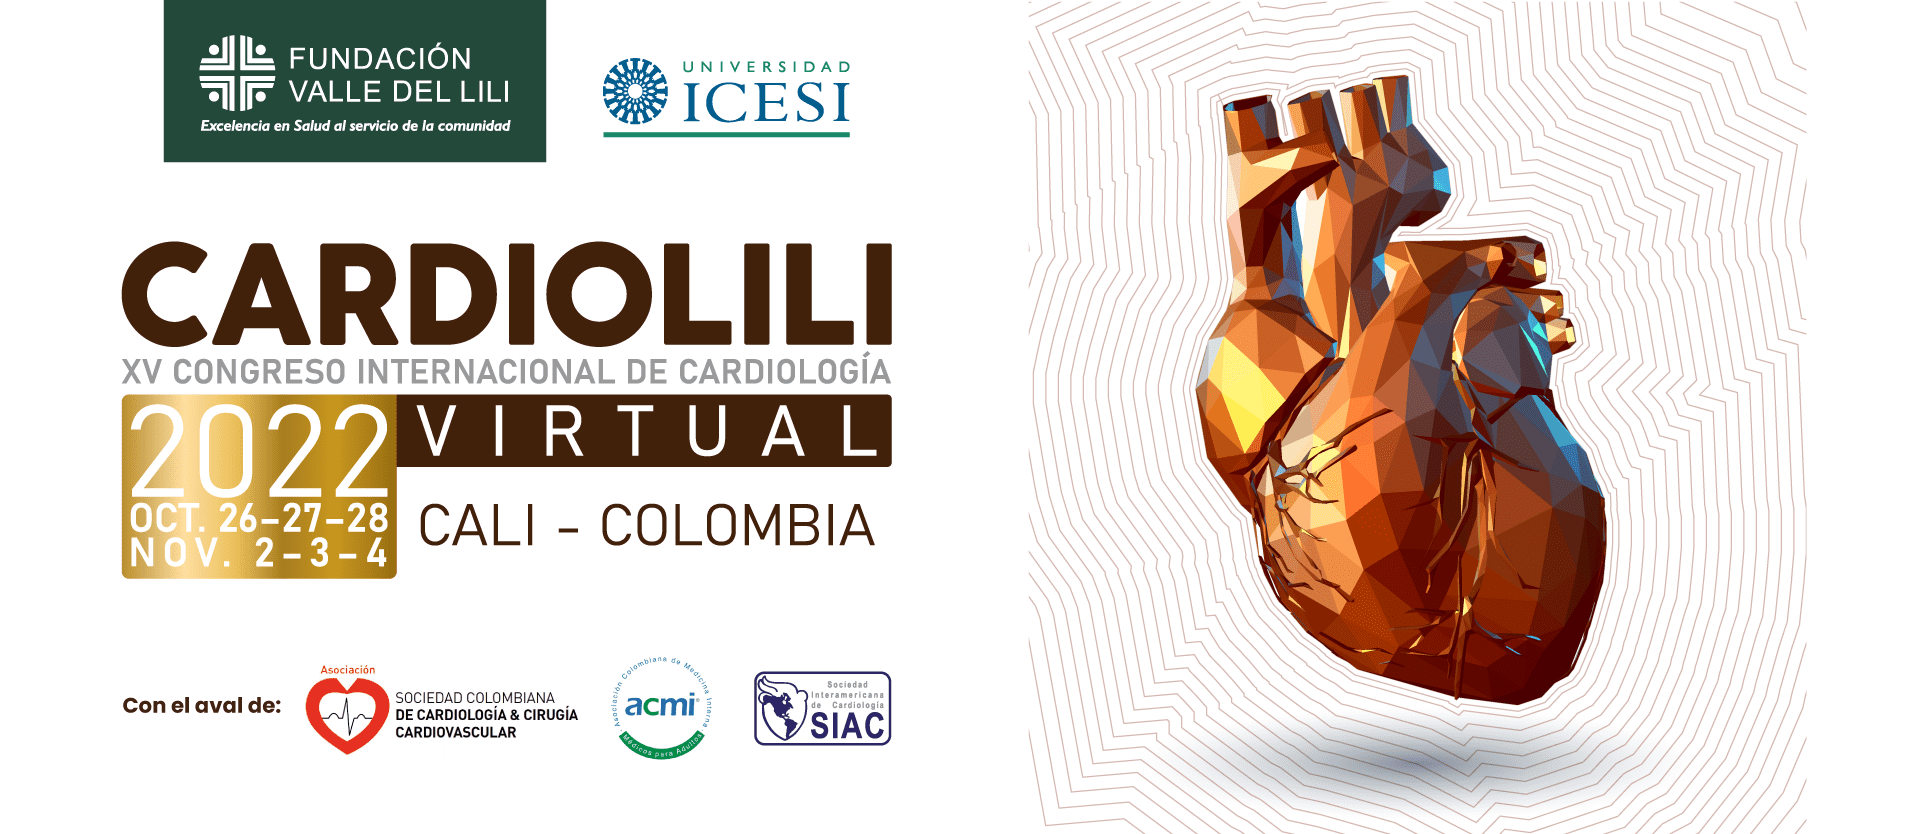 XV International Cardiology Congress – CARDIOLILI 2022 (Virtual)